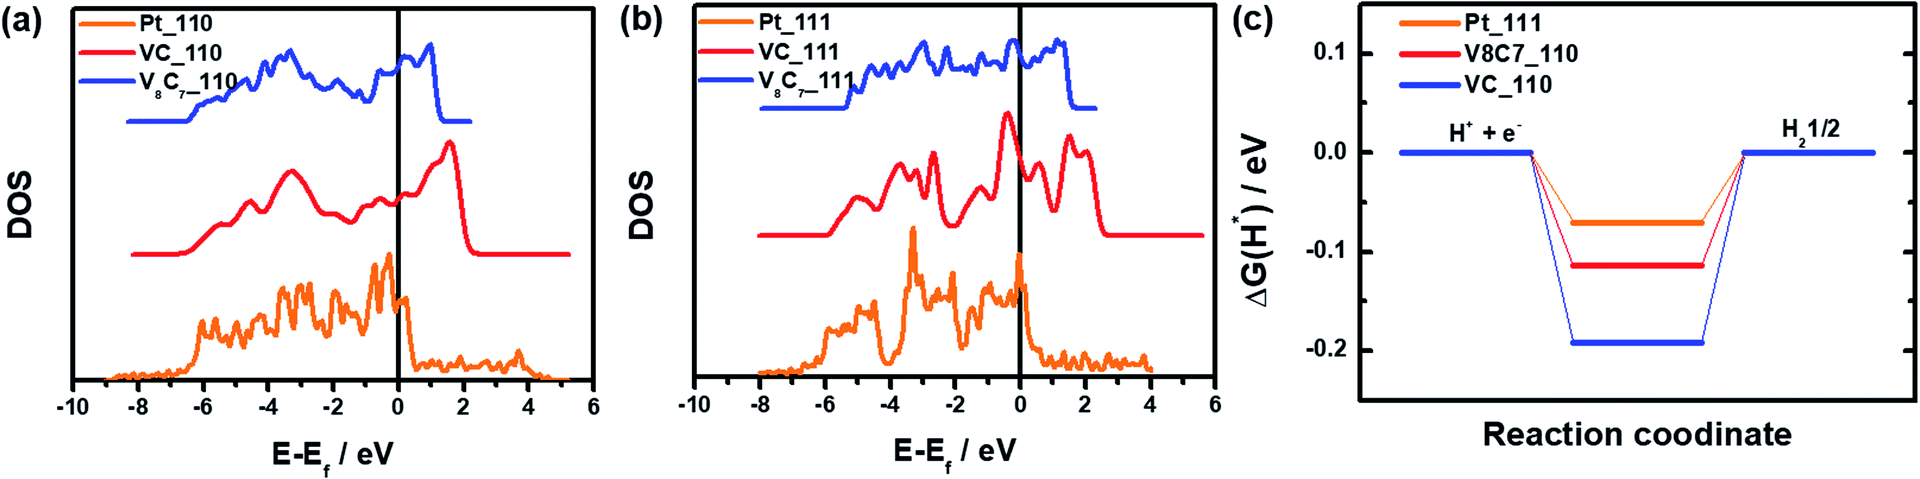 First Principles Study Of Vanadium Carbides As Electrocatalysts For Hydrogen And Oxygen Evolution Reactions Rsc Advances Rsc Publishing Doi 10 1039 C9rac